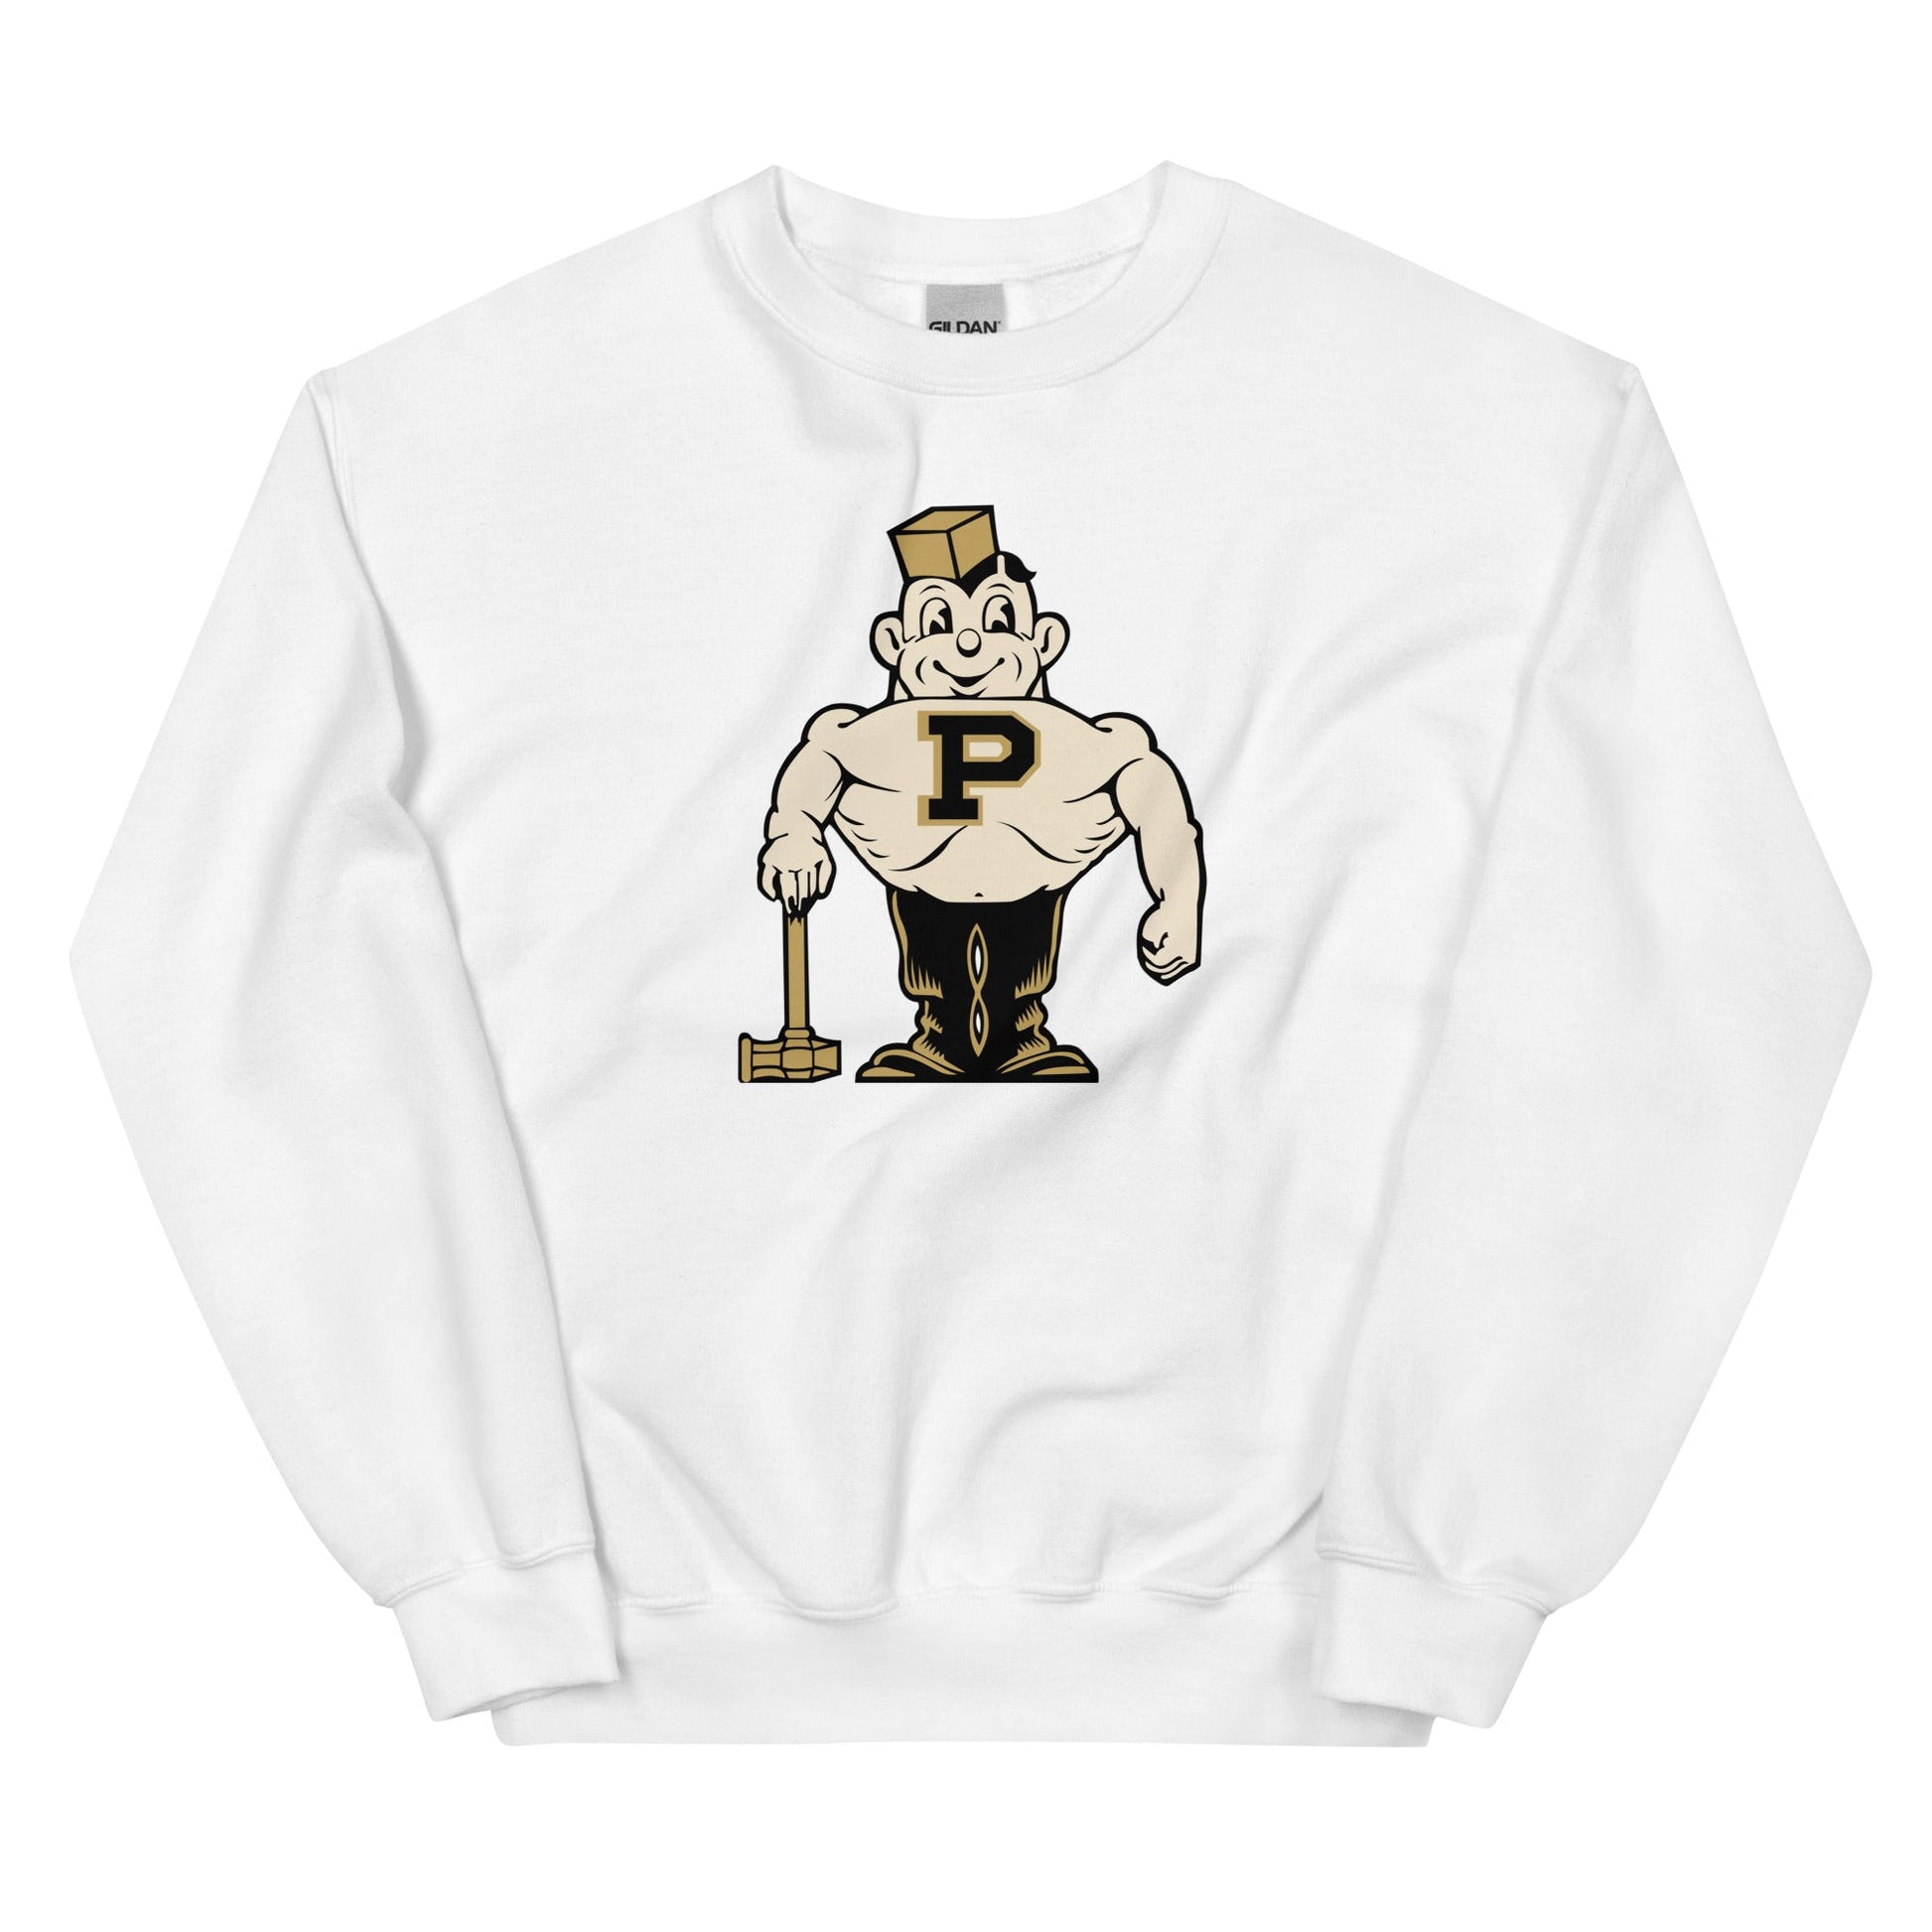 Rice University - Vintage Crewneck Sweatshirt - Ash Grey